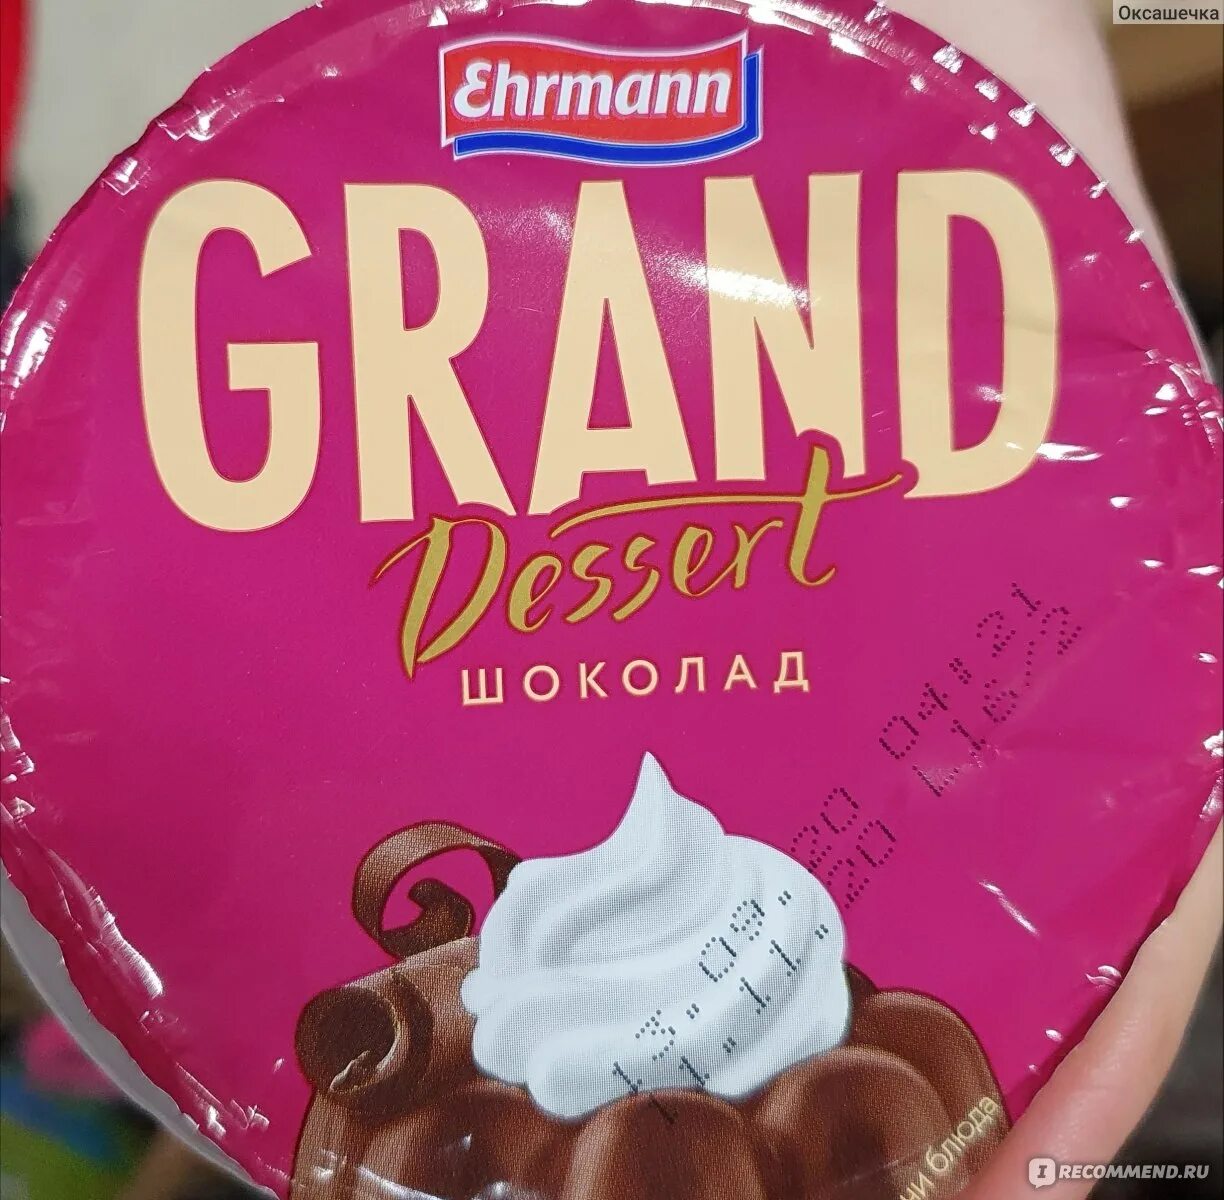 Пудинг Ehrmann Grand. Десерт Эрманн Гранд шоколад. Пудинг шоколадный Ehrmann Grand. Эрман пудинг Гранд десерт шоколадный. Ehrmann grand dessert шоколад